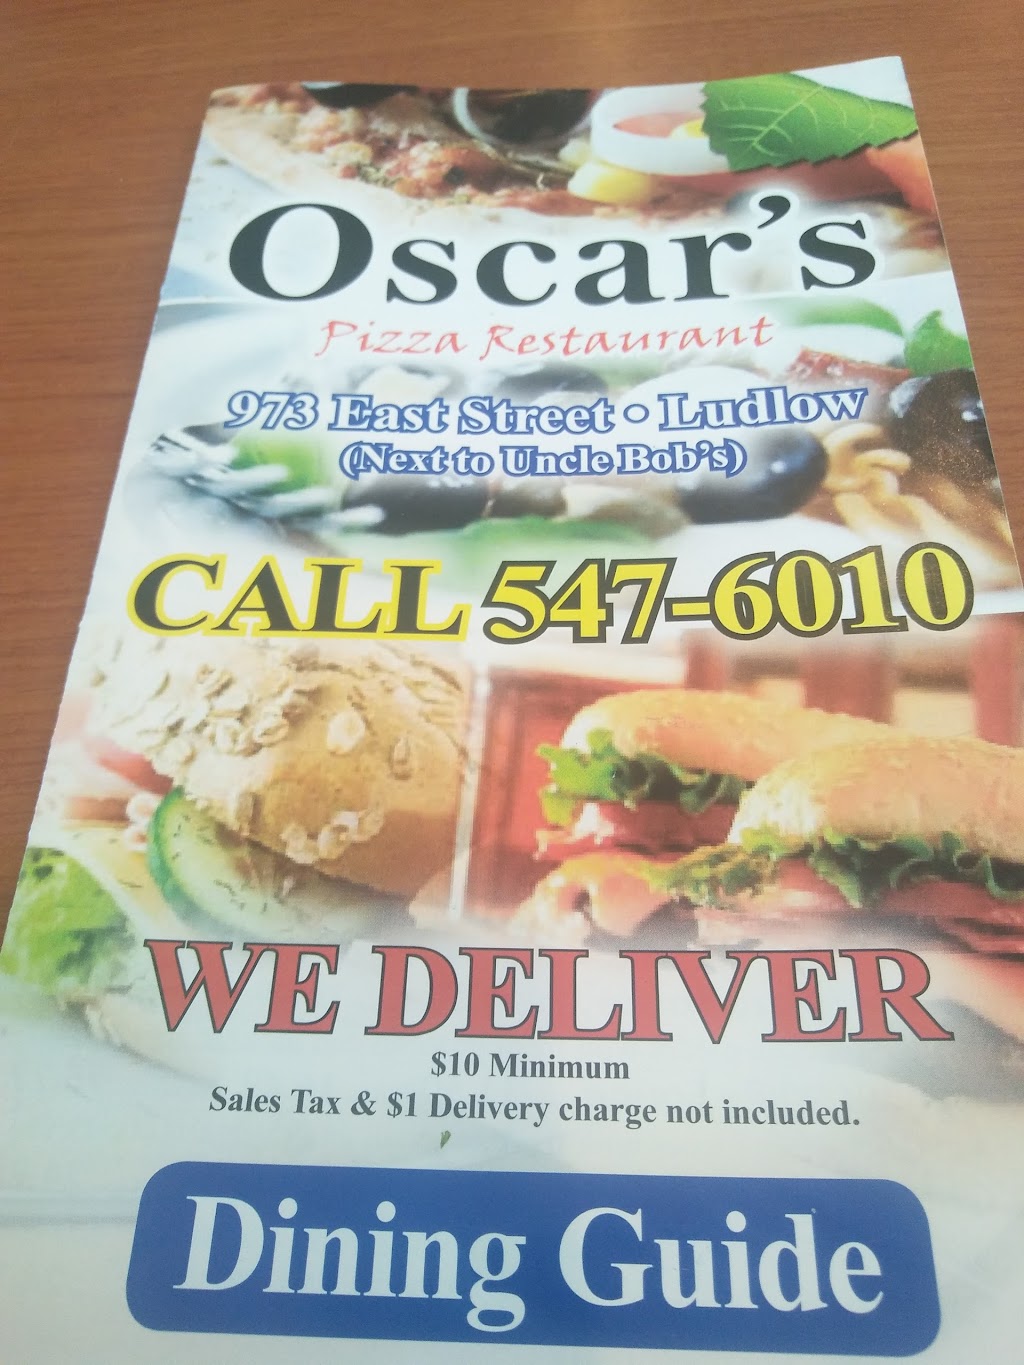 Oscars Pizza Restaurant | 973 East St, Ludlow, MA 01056 | Phone: (413) 547-6010